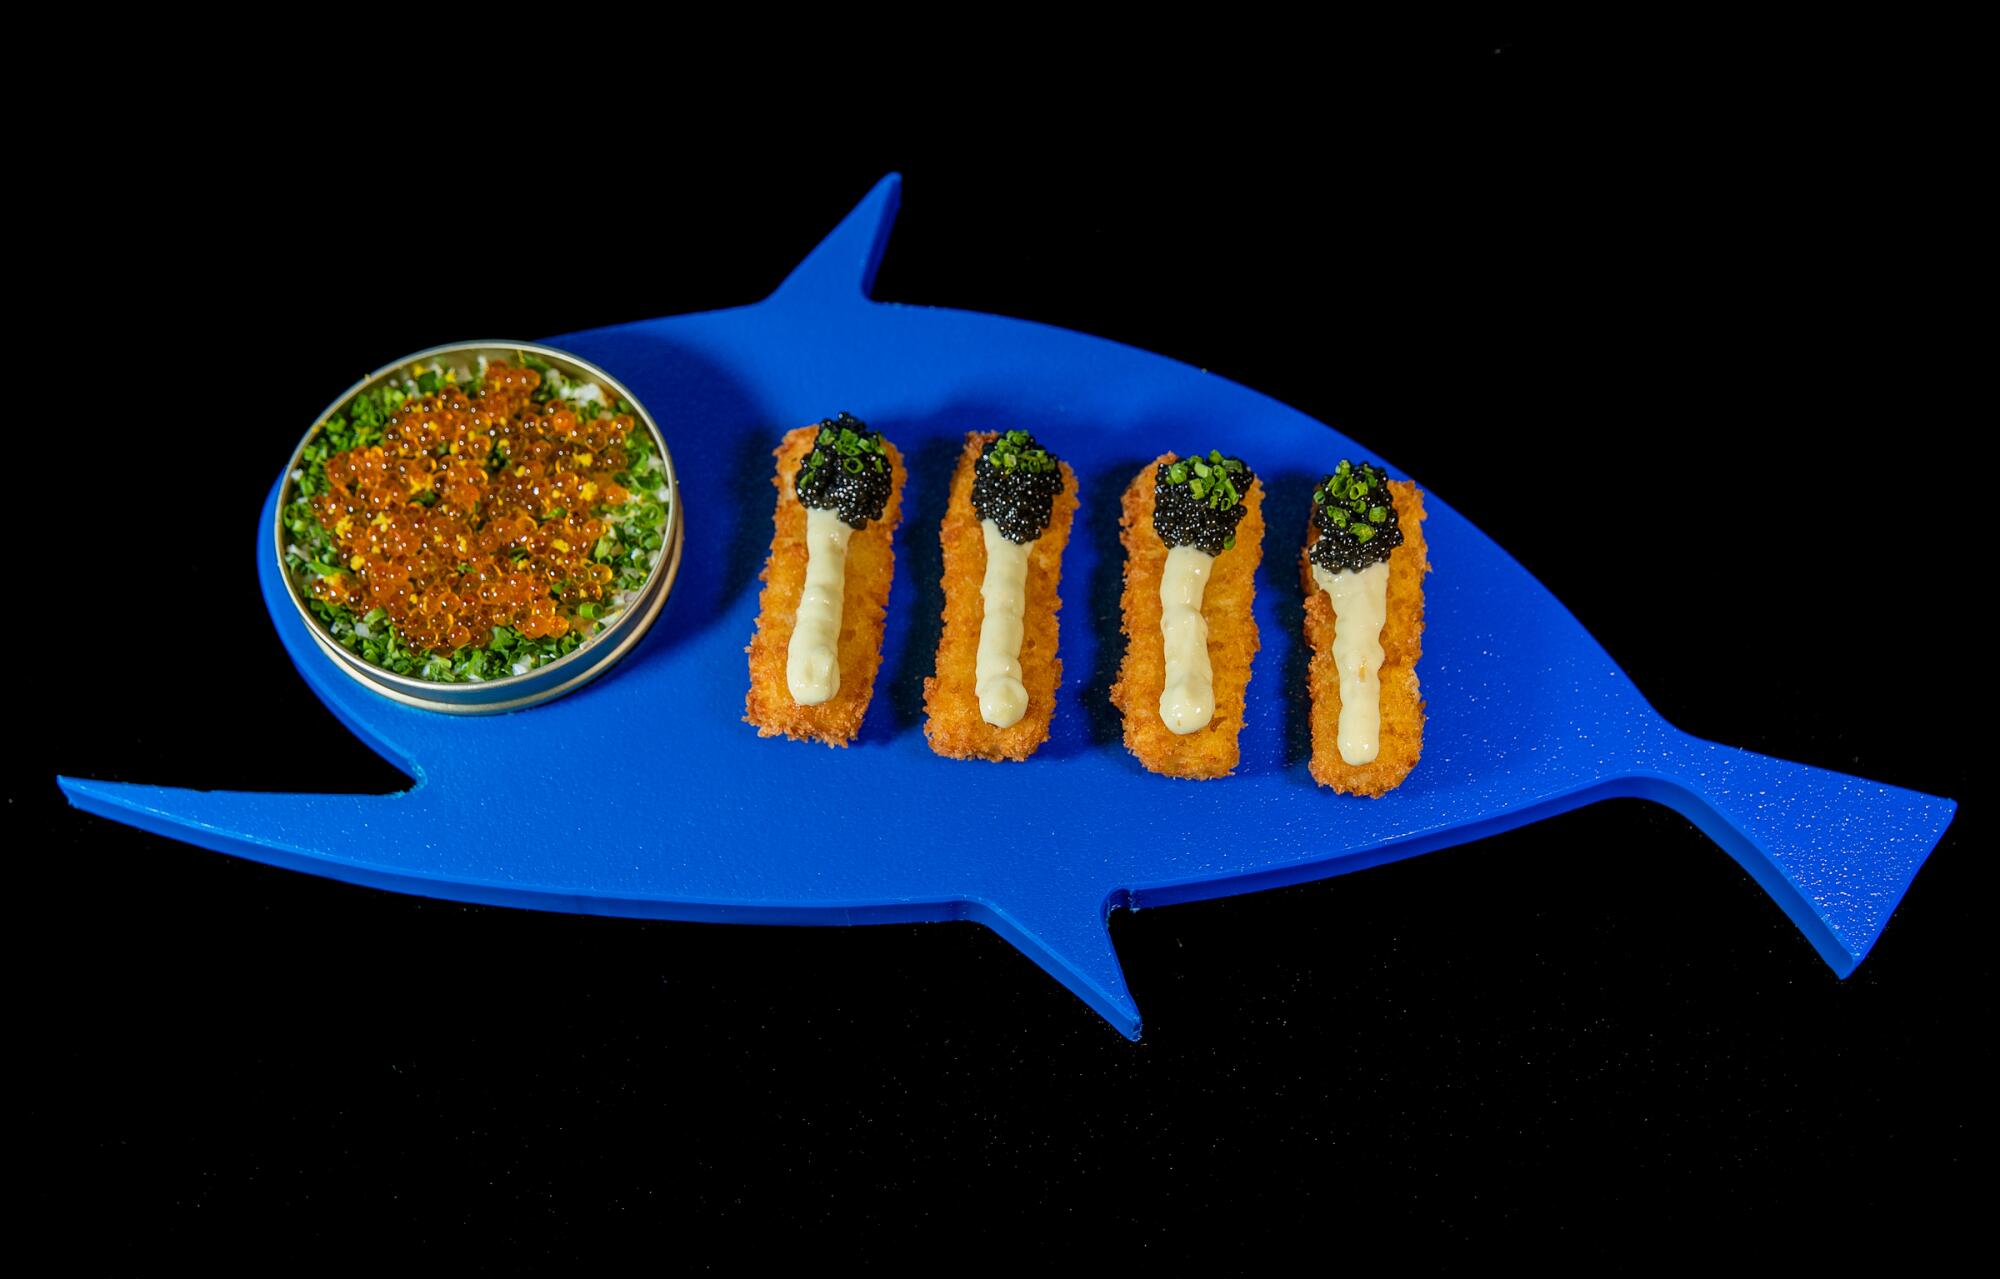 A fish-shaped blue tray holds fish sticks